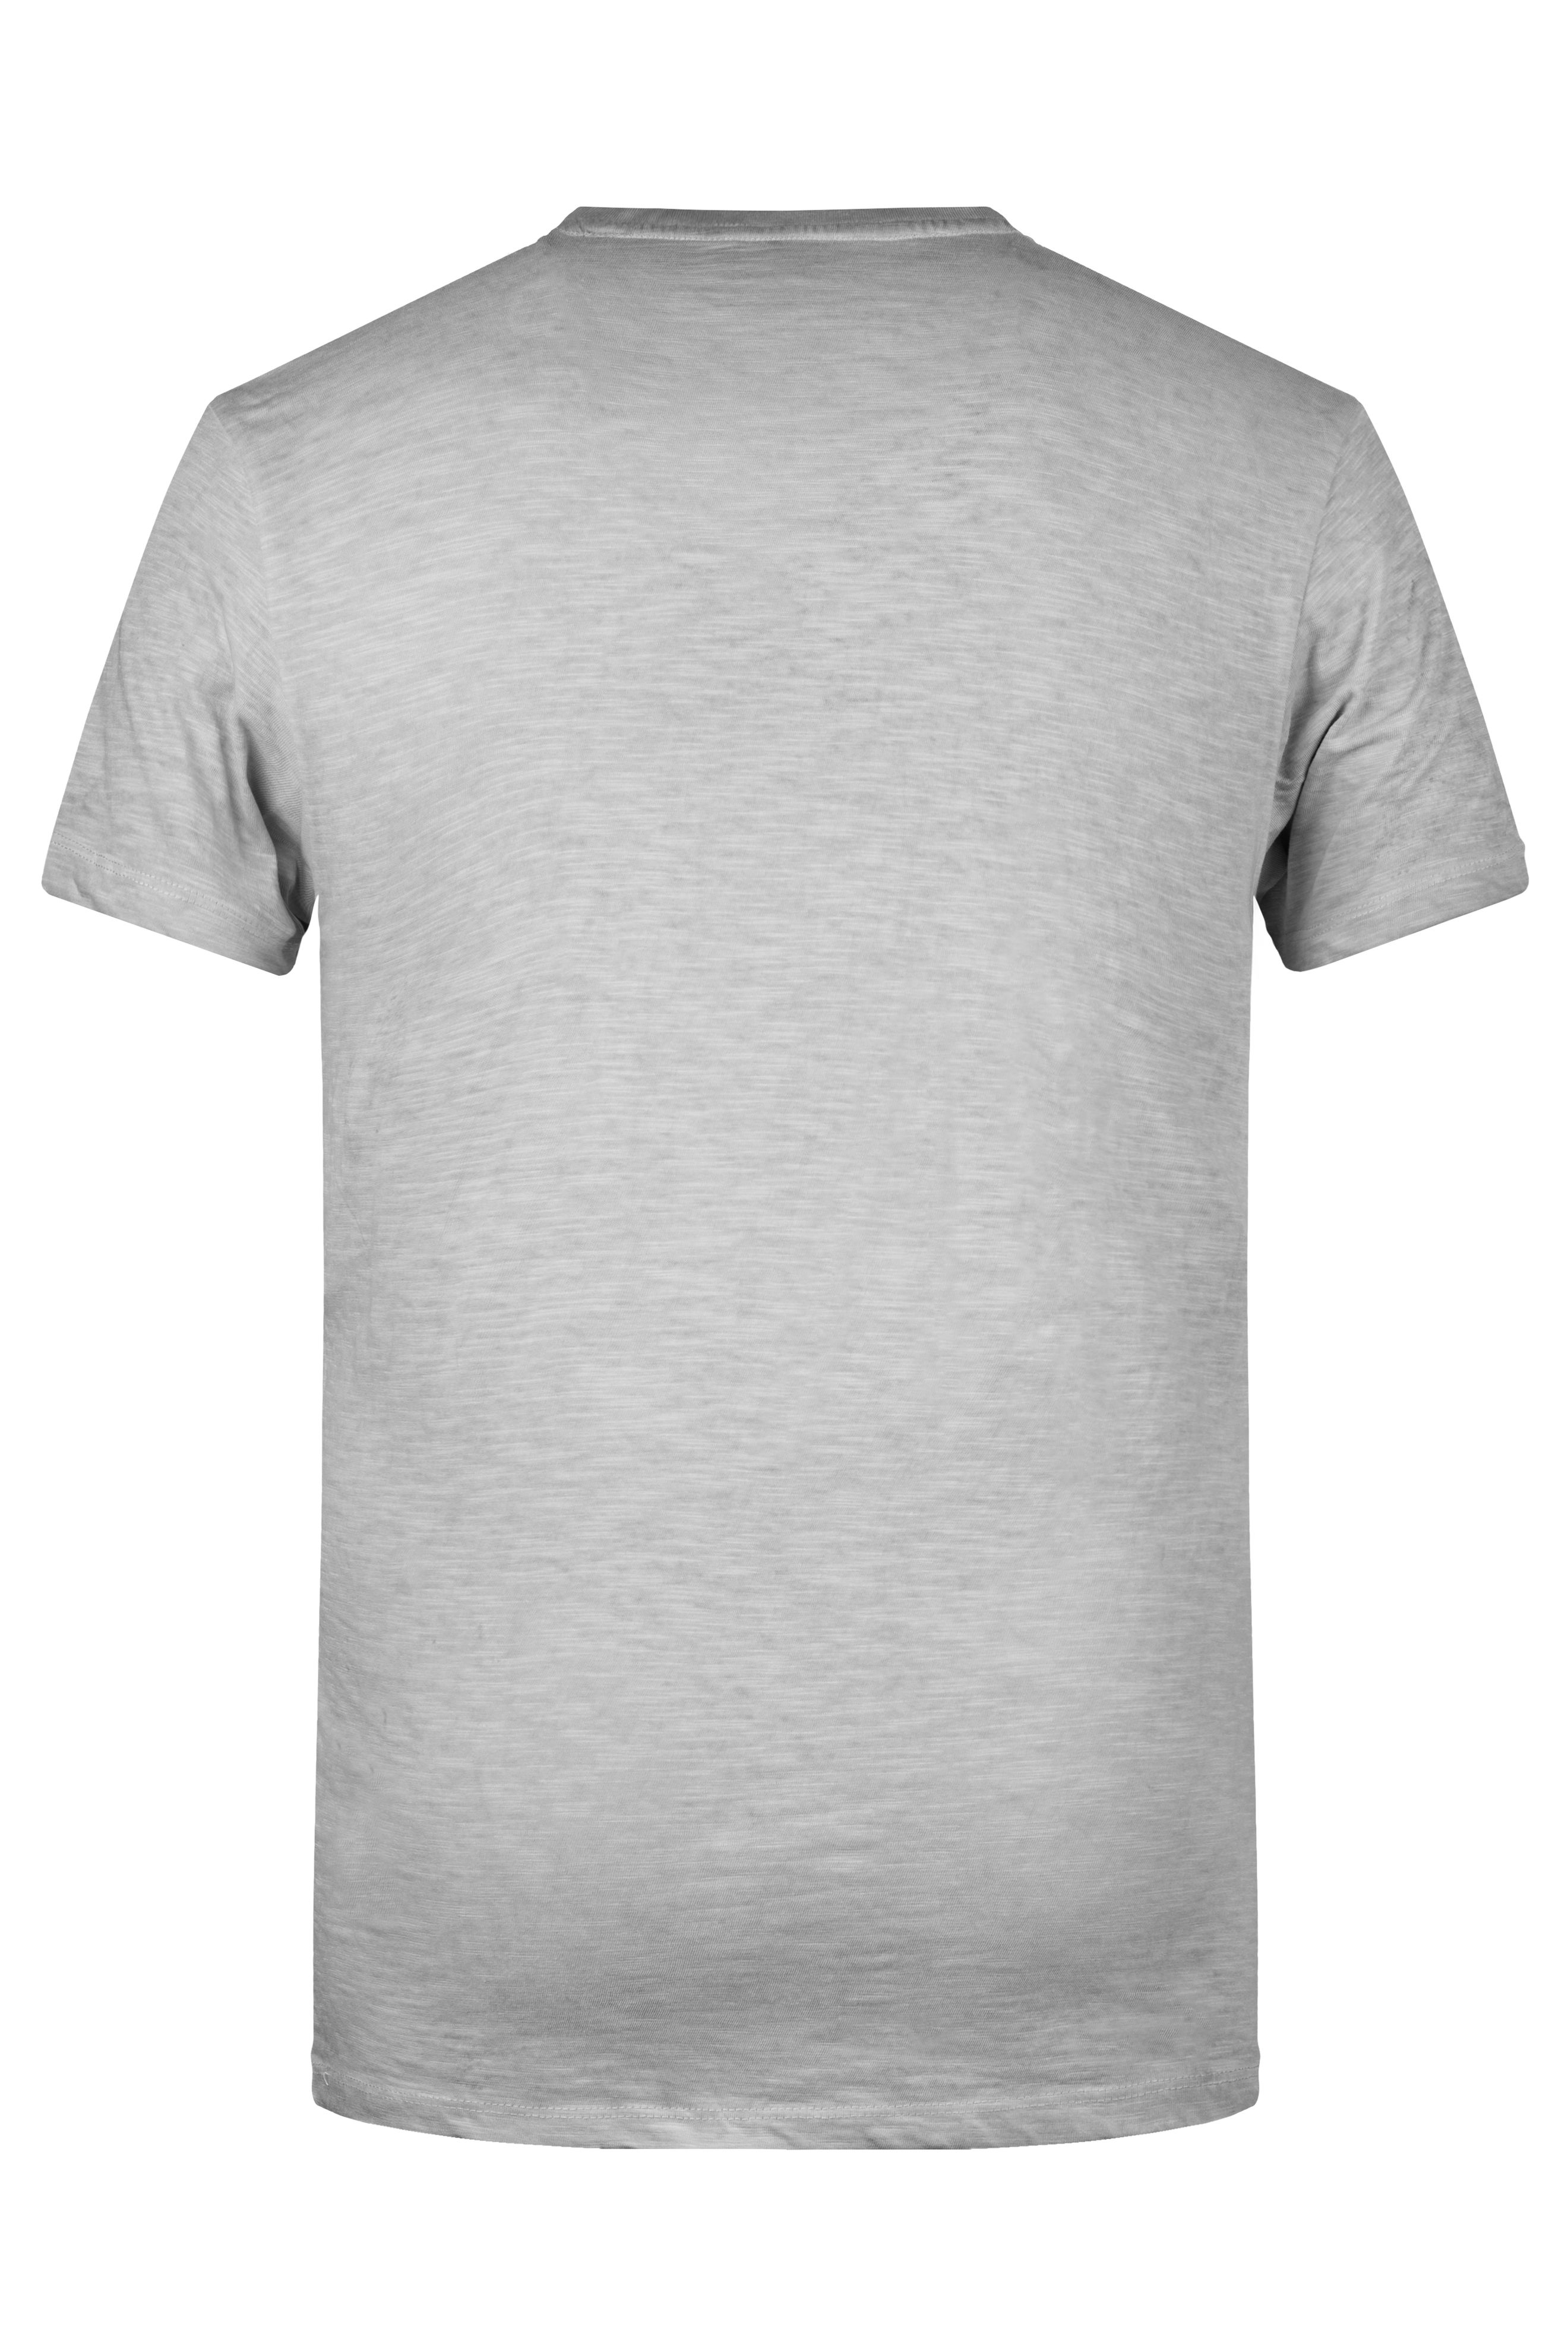 Men's Slub-T 8016 T-Shirt im Vintage-Look